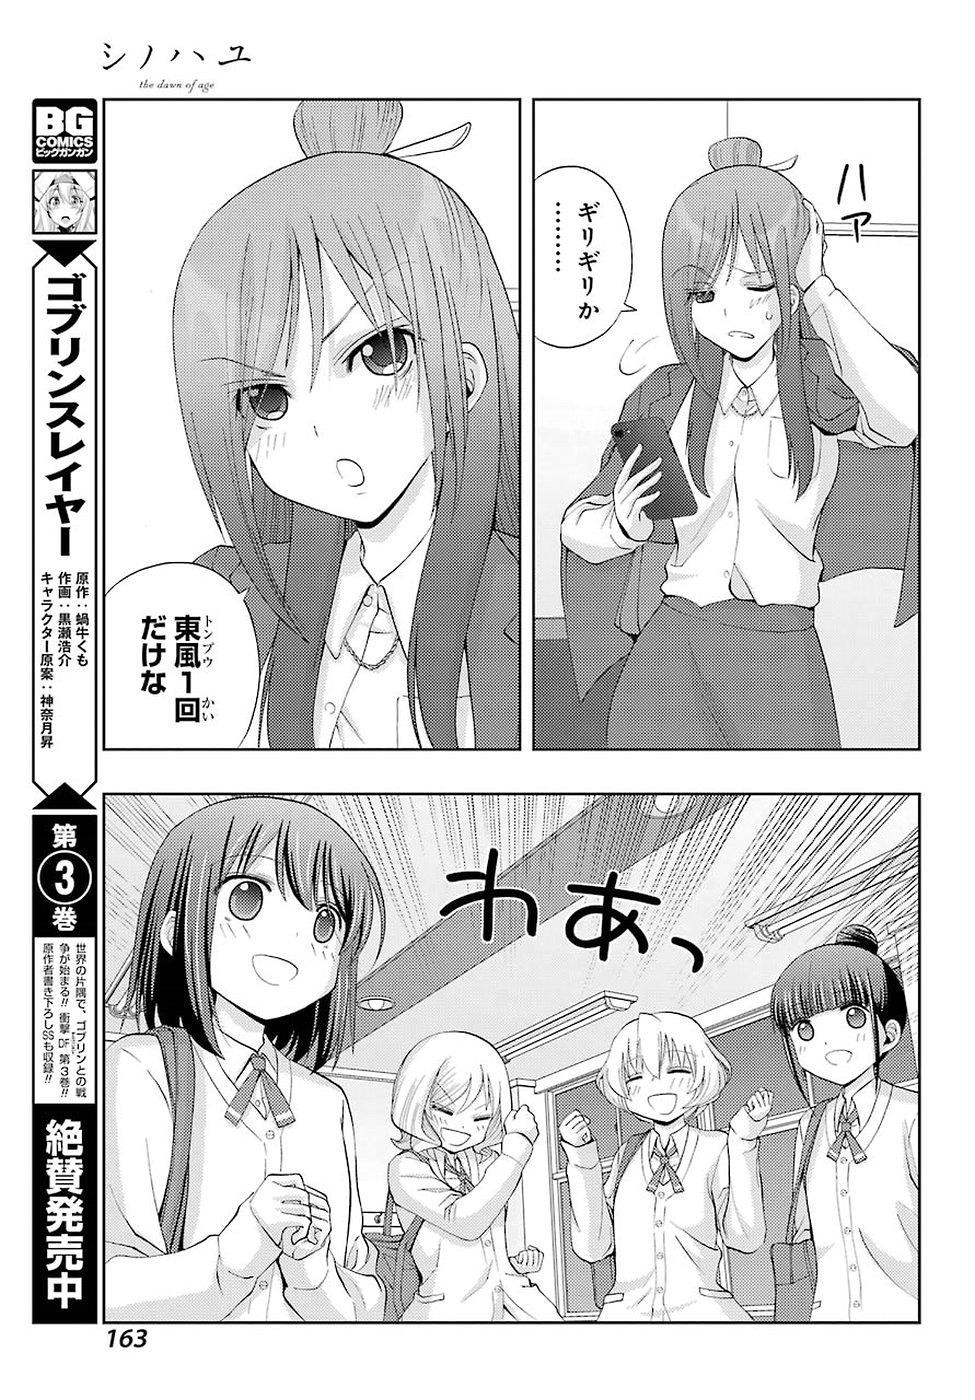 Shinohayu - The Dawn of Age Manga - Chapter 053 - Page 19